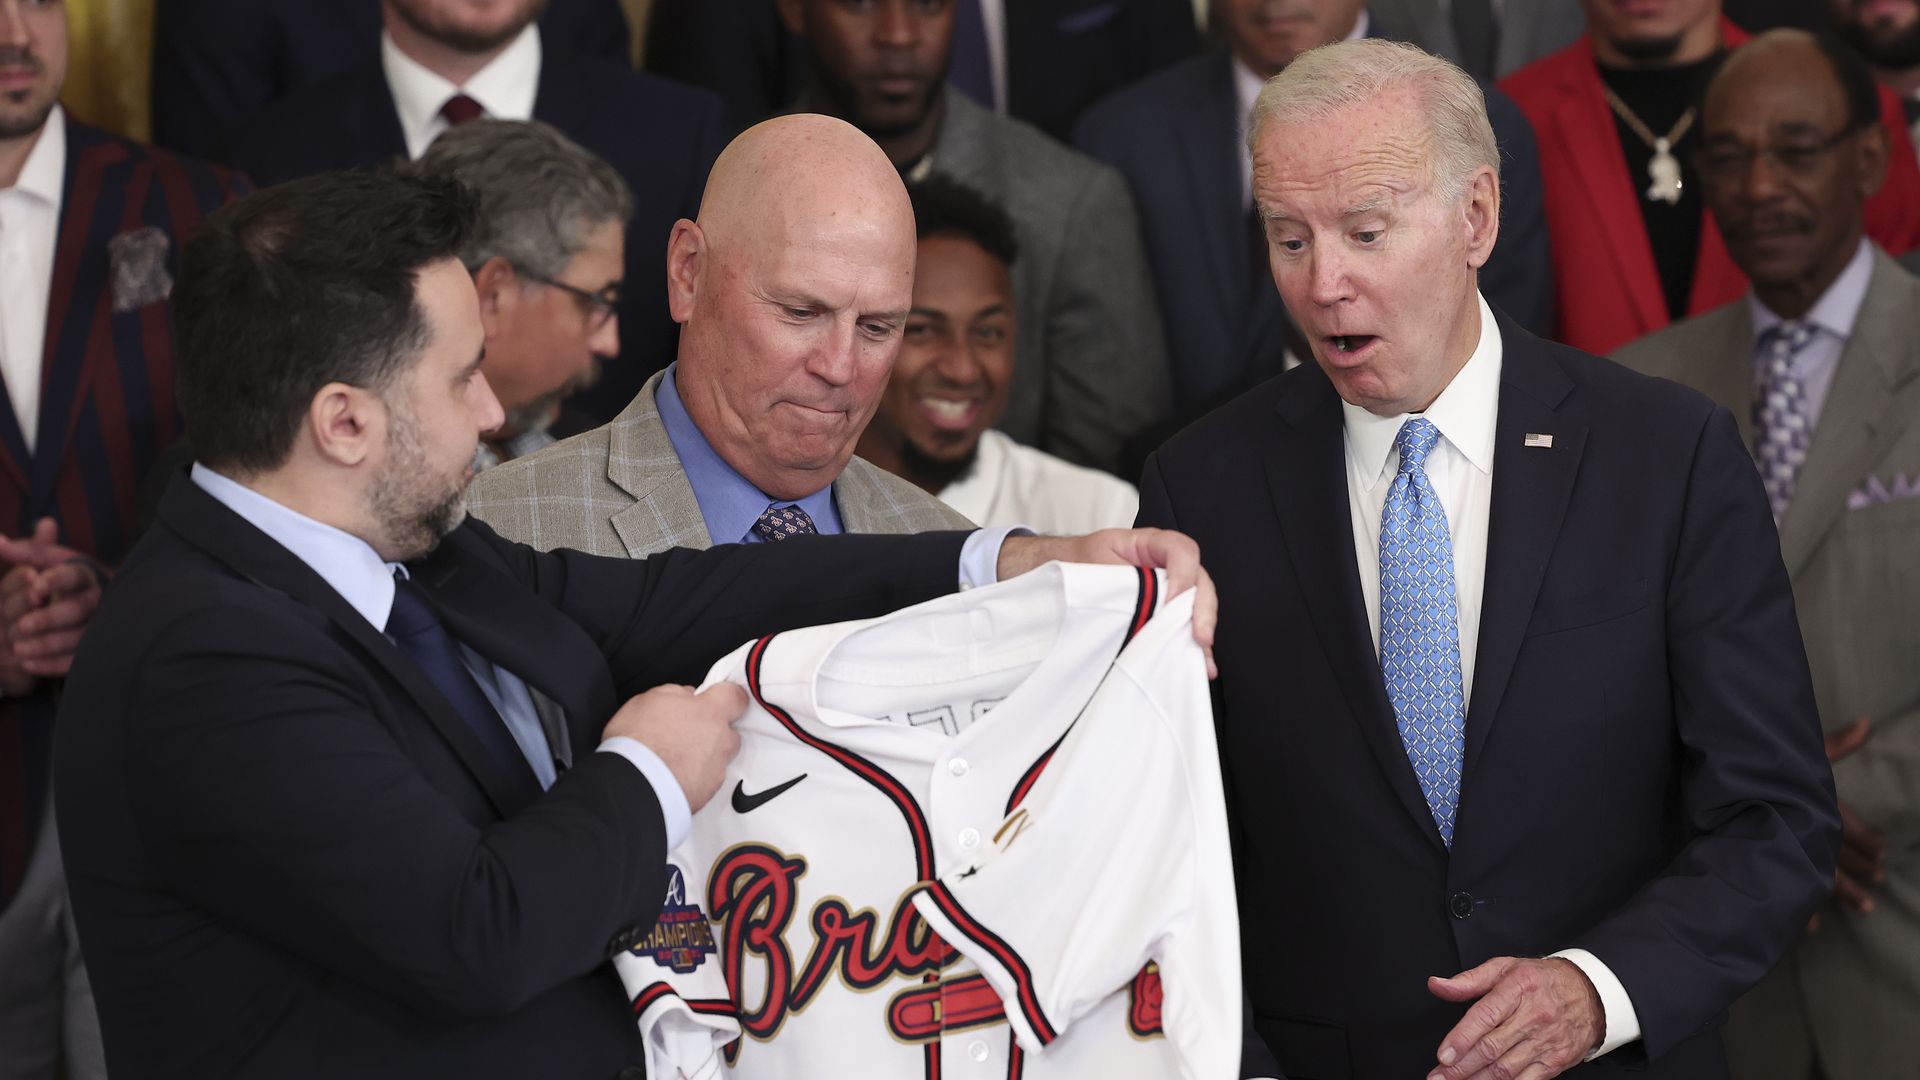 Atlanta Braves present Biden with a jersey